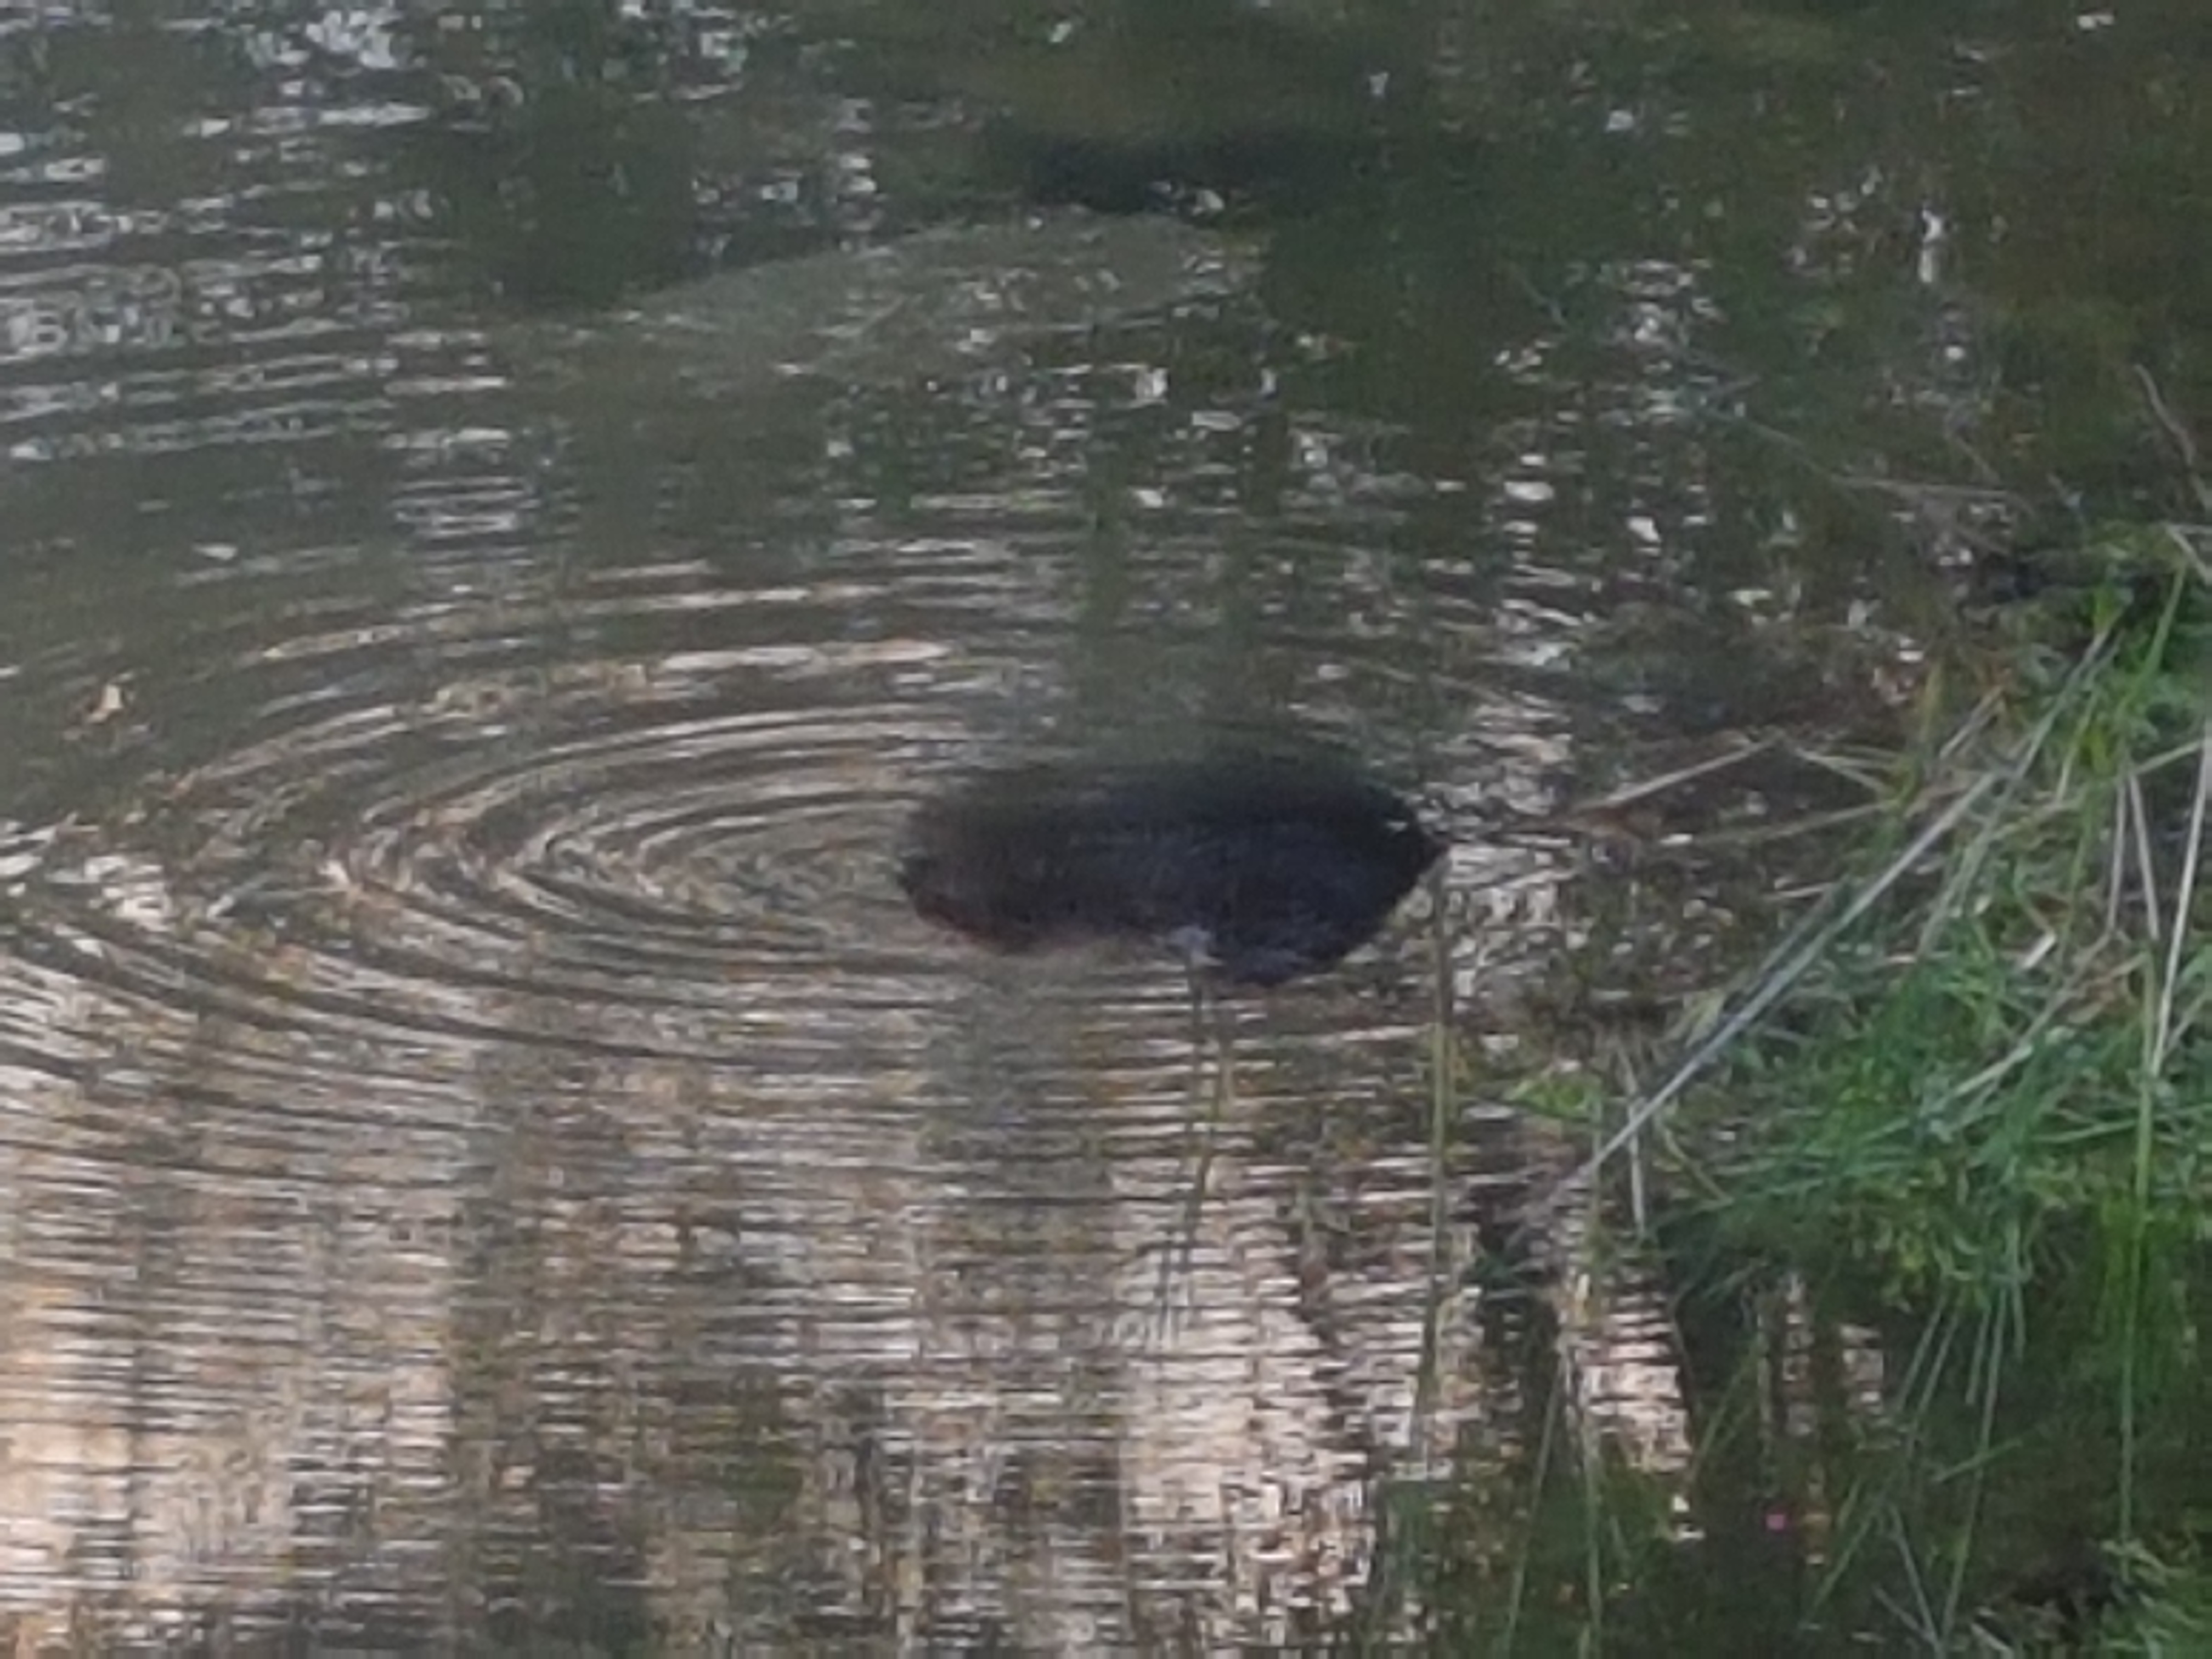 My neighbor the beaver